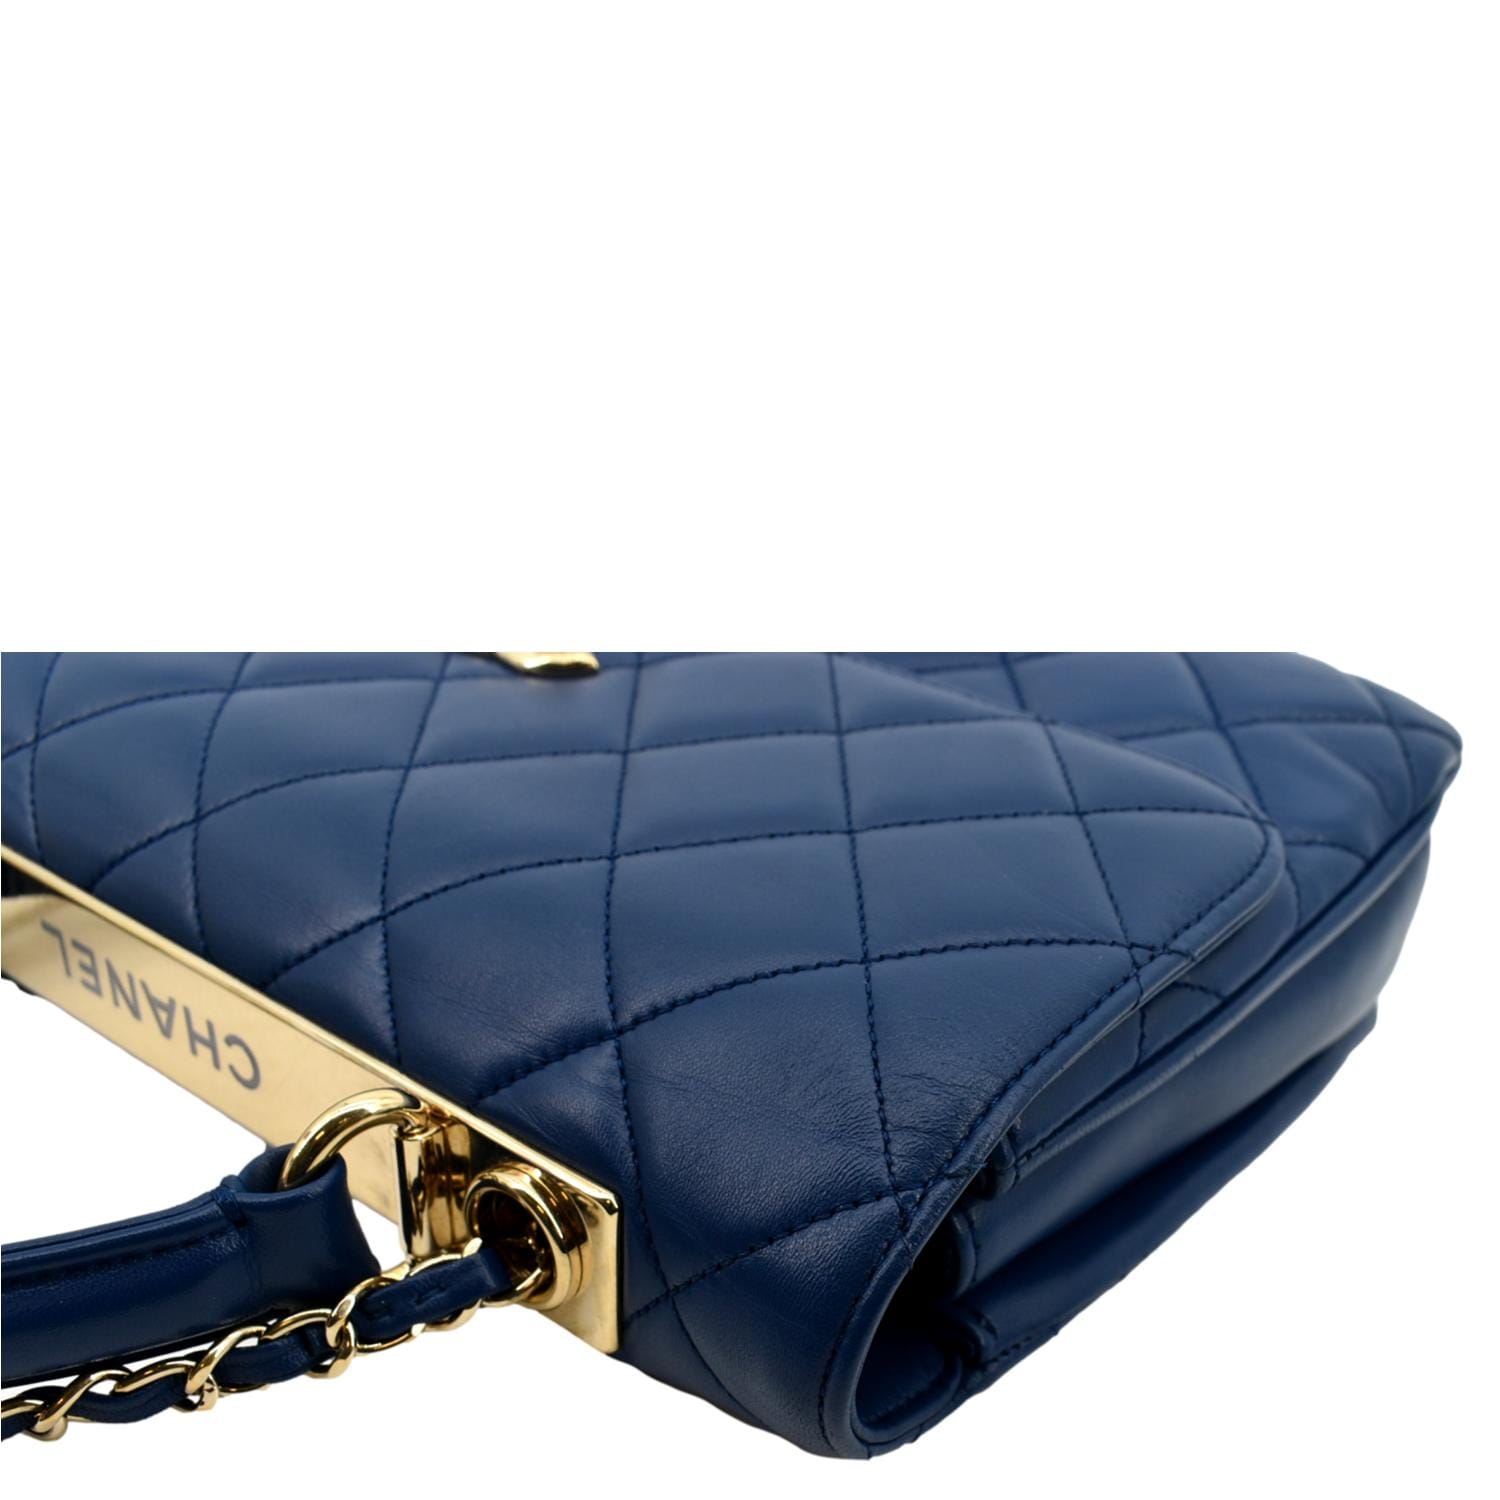 Chanel Trendy CC Flap bag